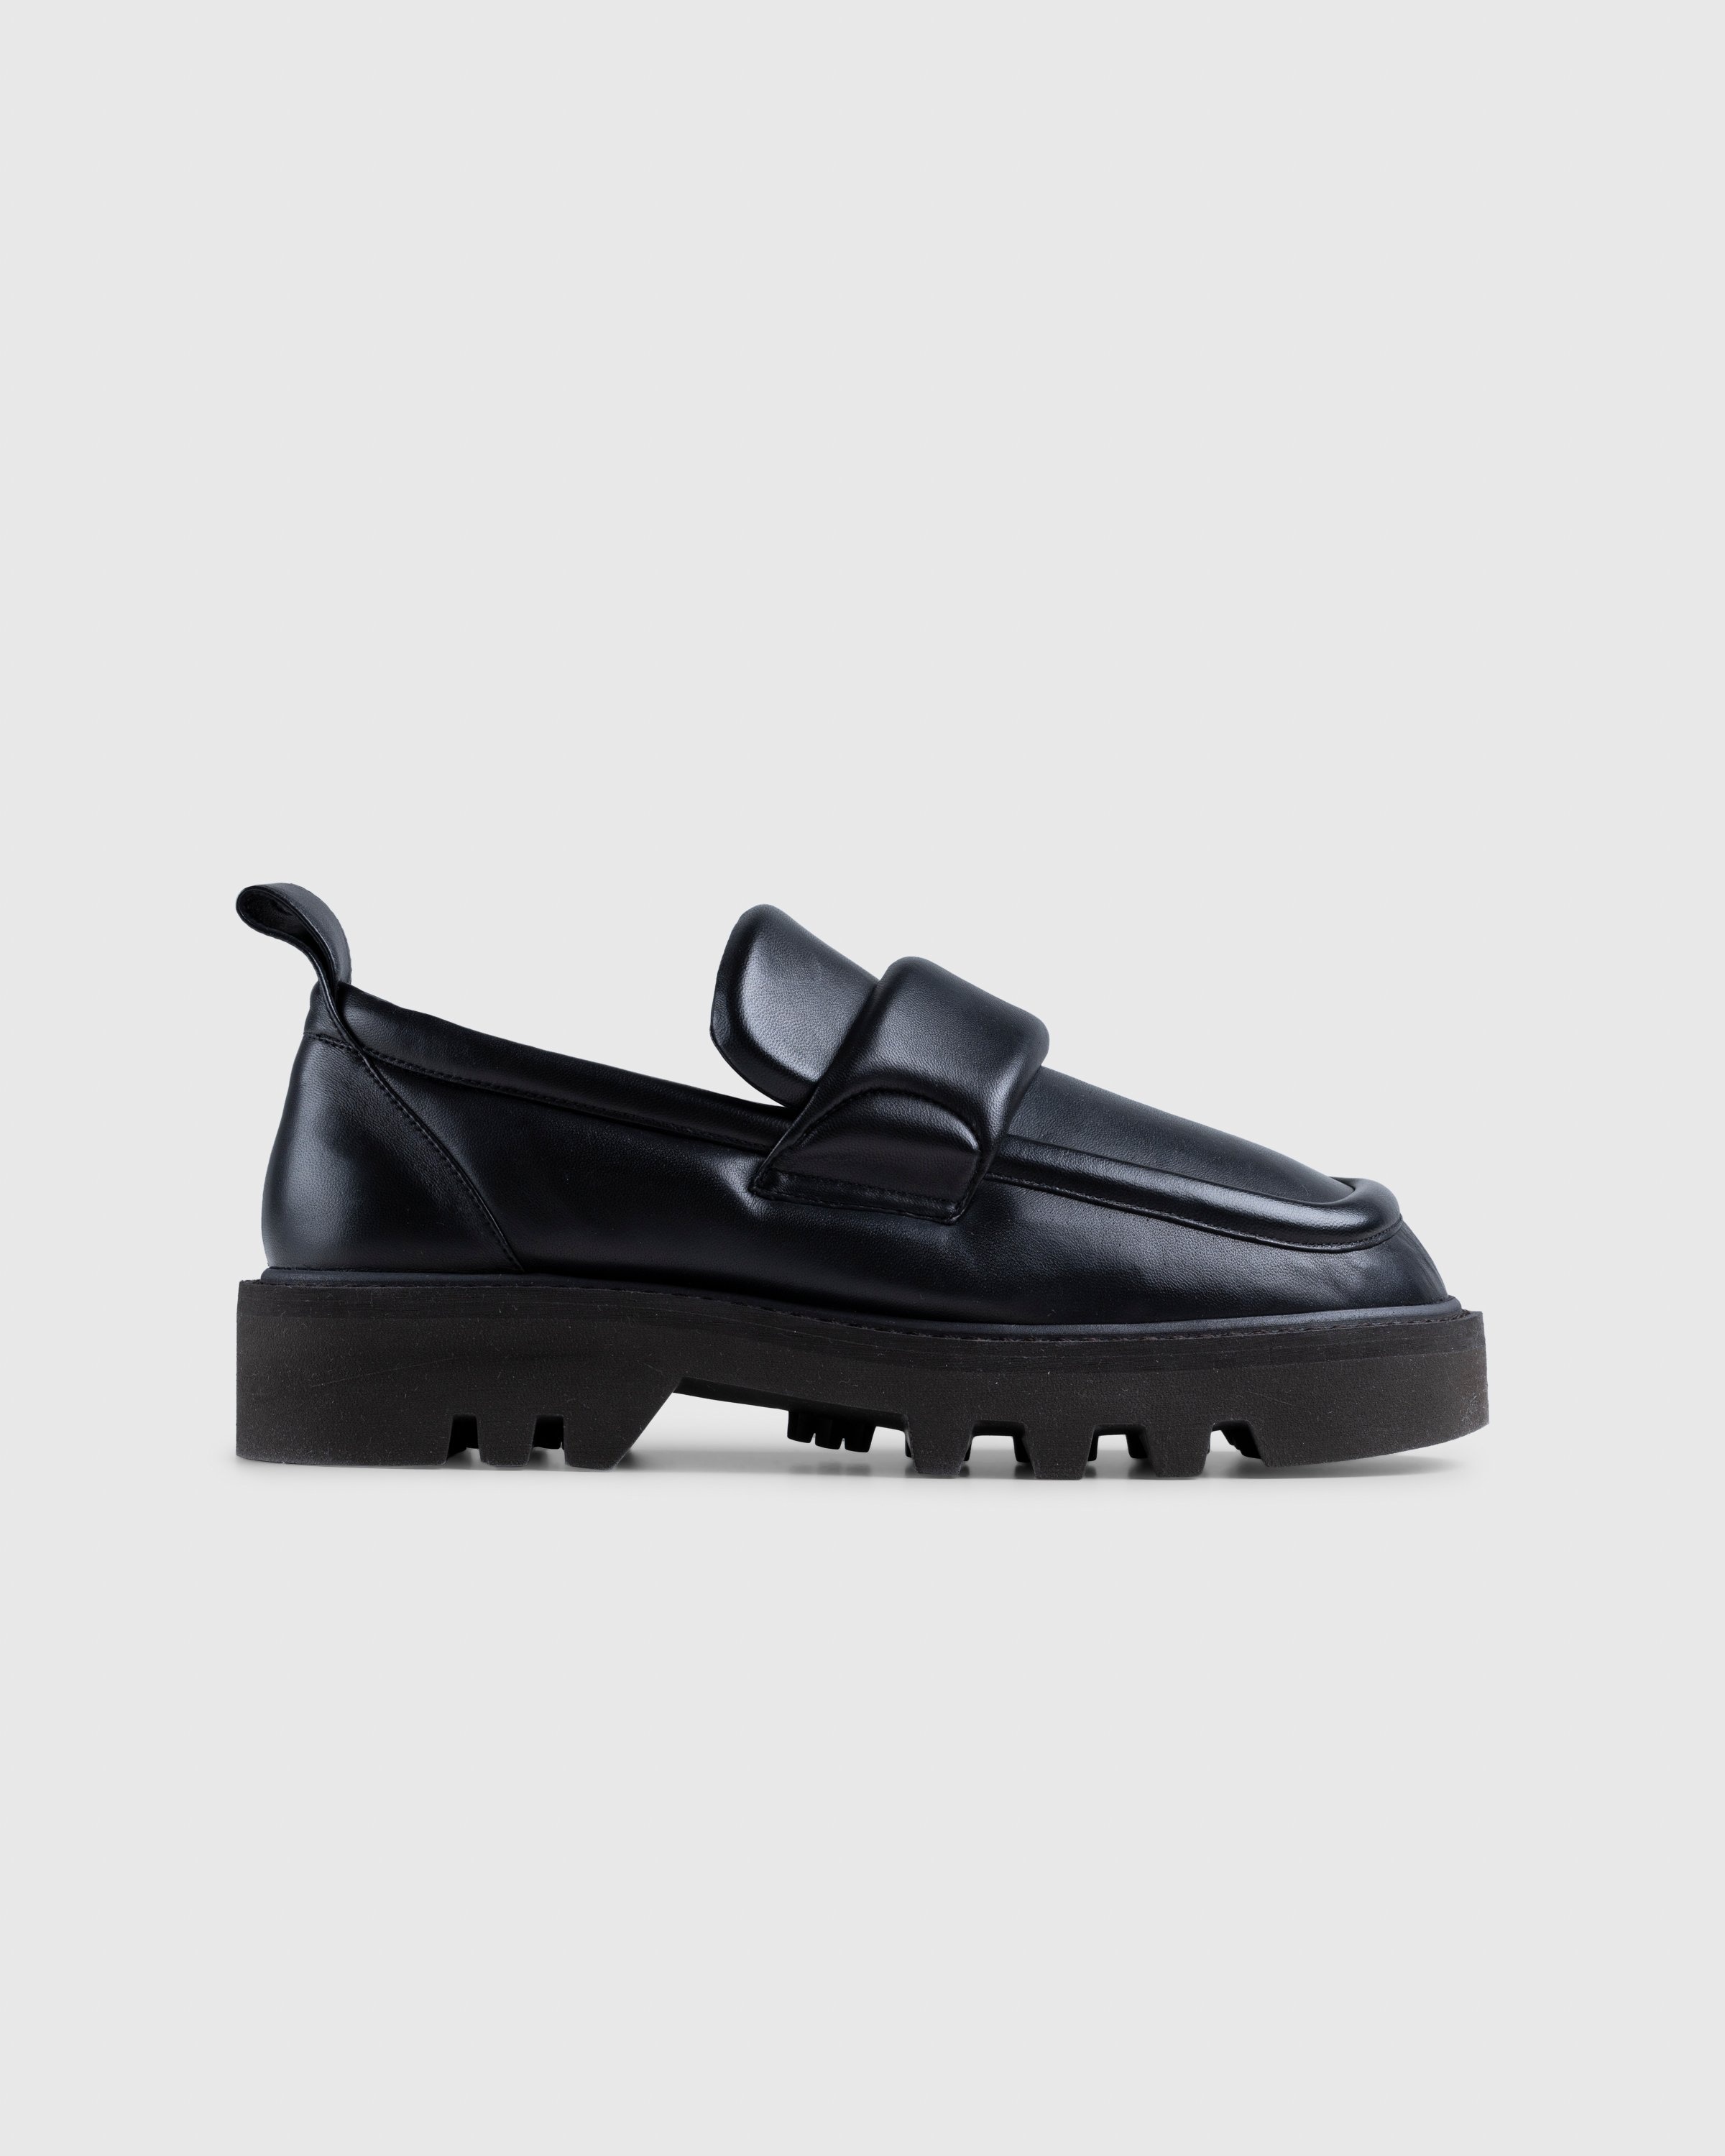 Dries van Noten – Padded Leather Loafers Black - Sandals & Slides - Black - Image 1